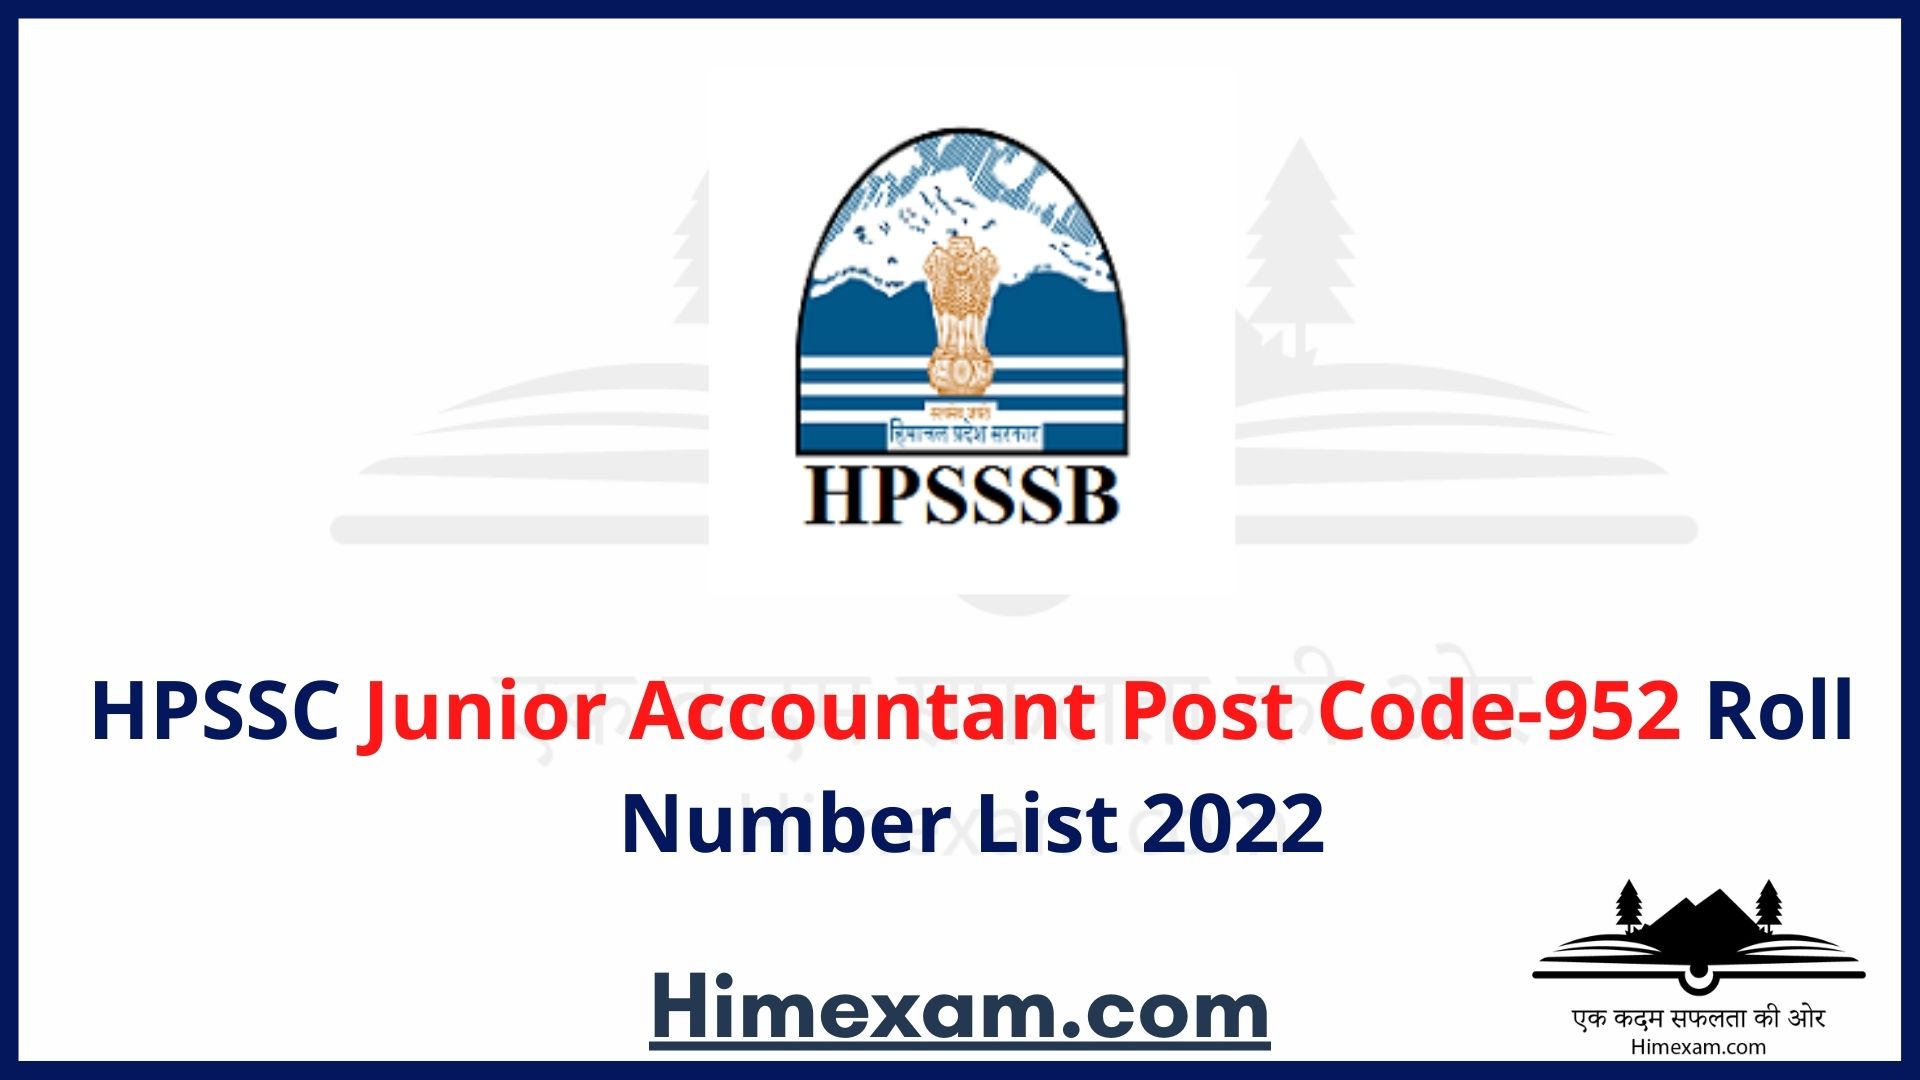 HPSSC Junior Accountant Post Code-952 Roll Number List 2022